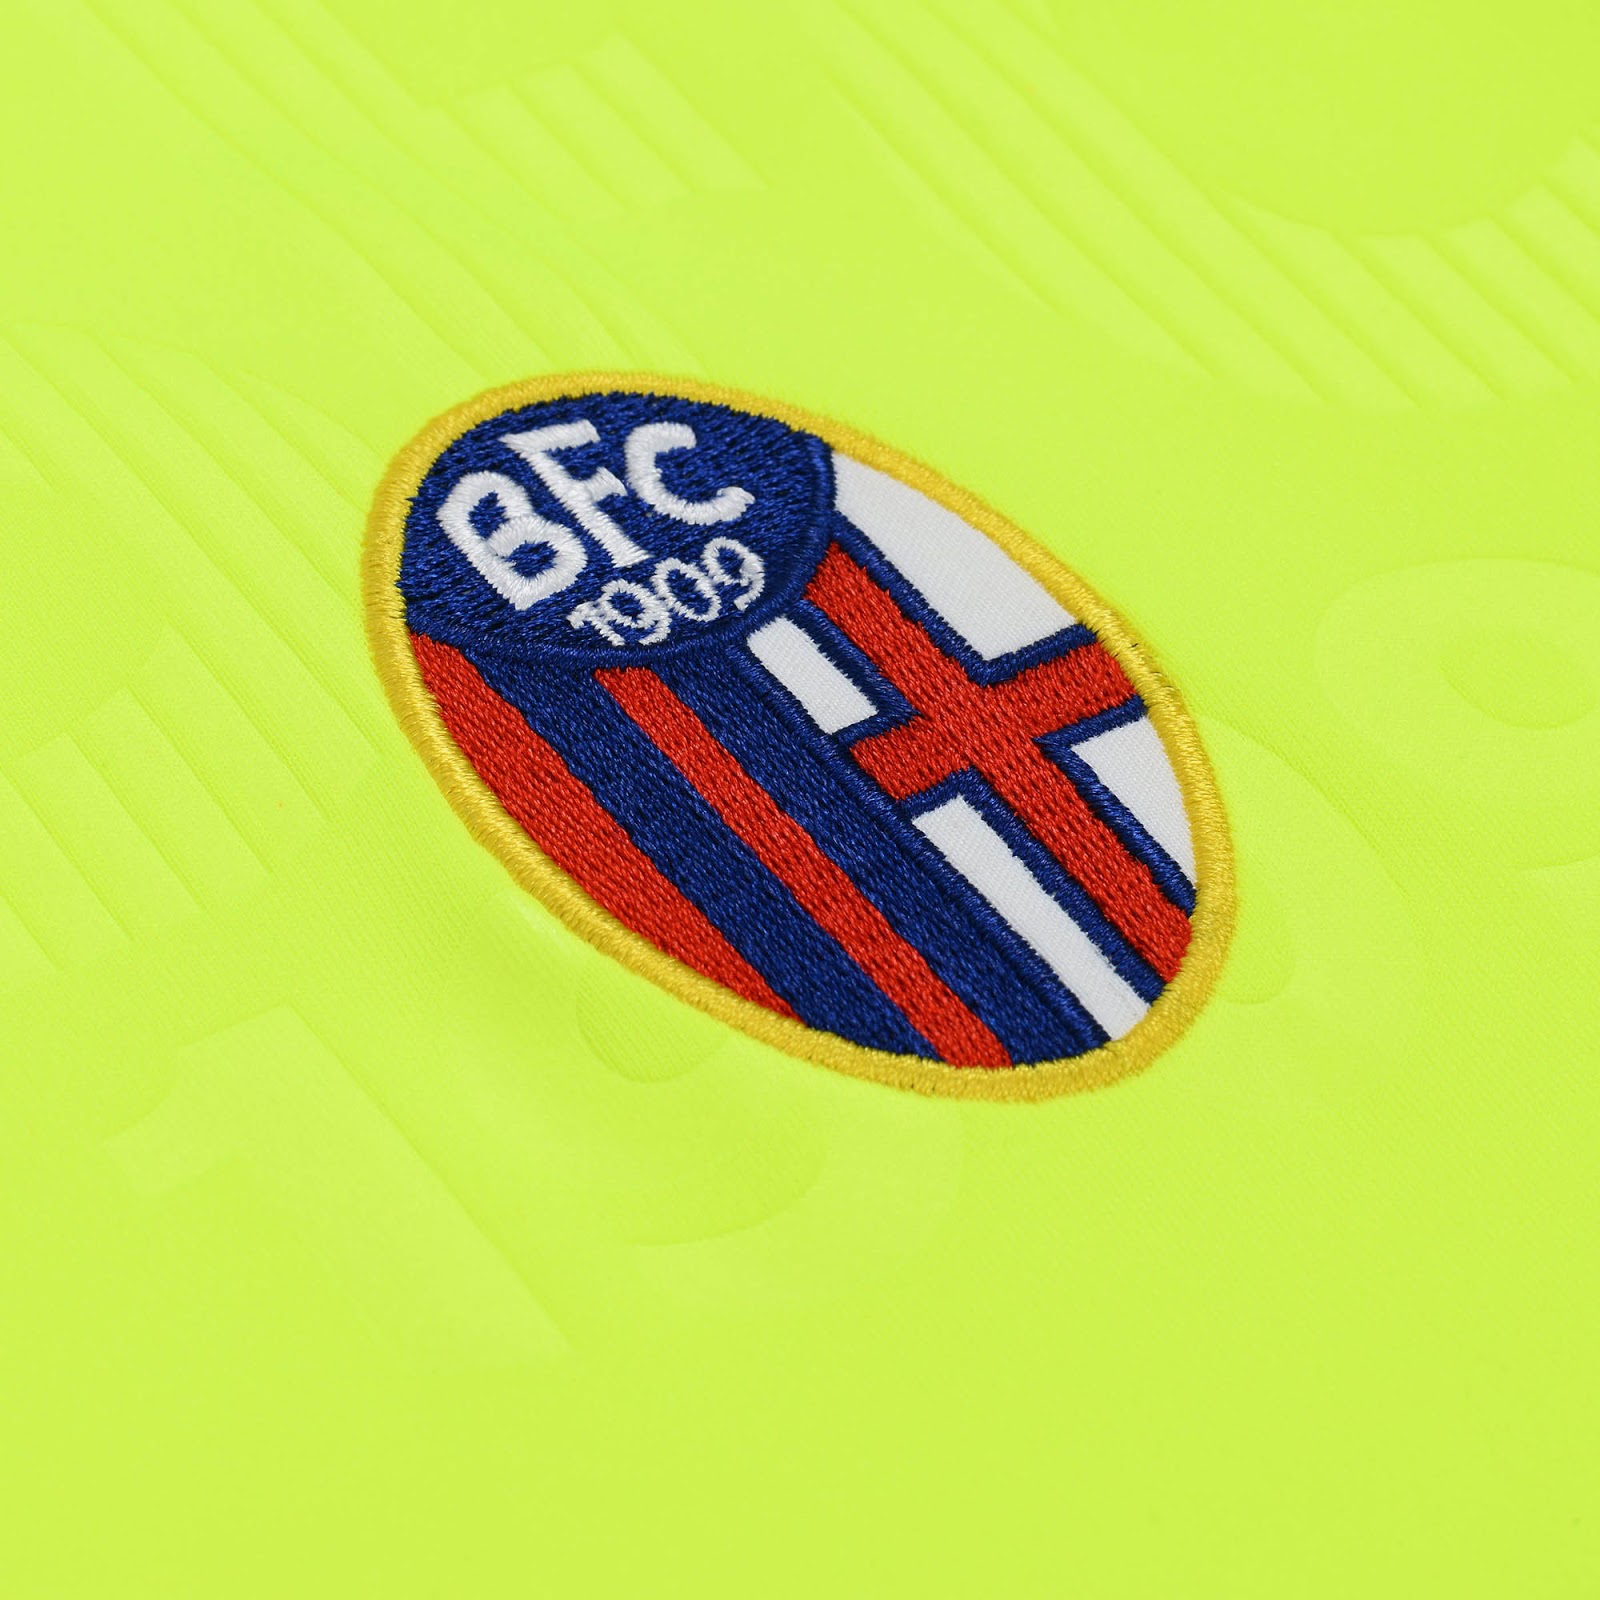 bologna-16-17-away-kit badge